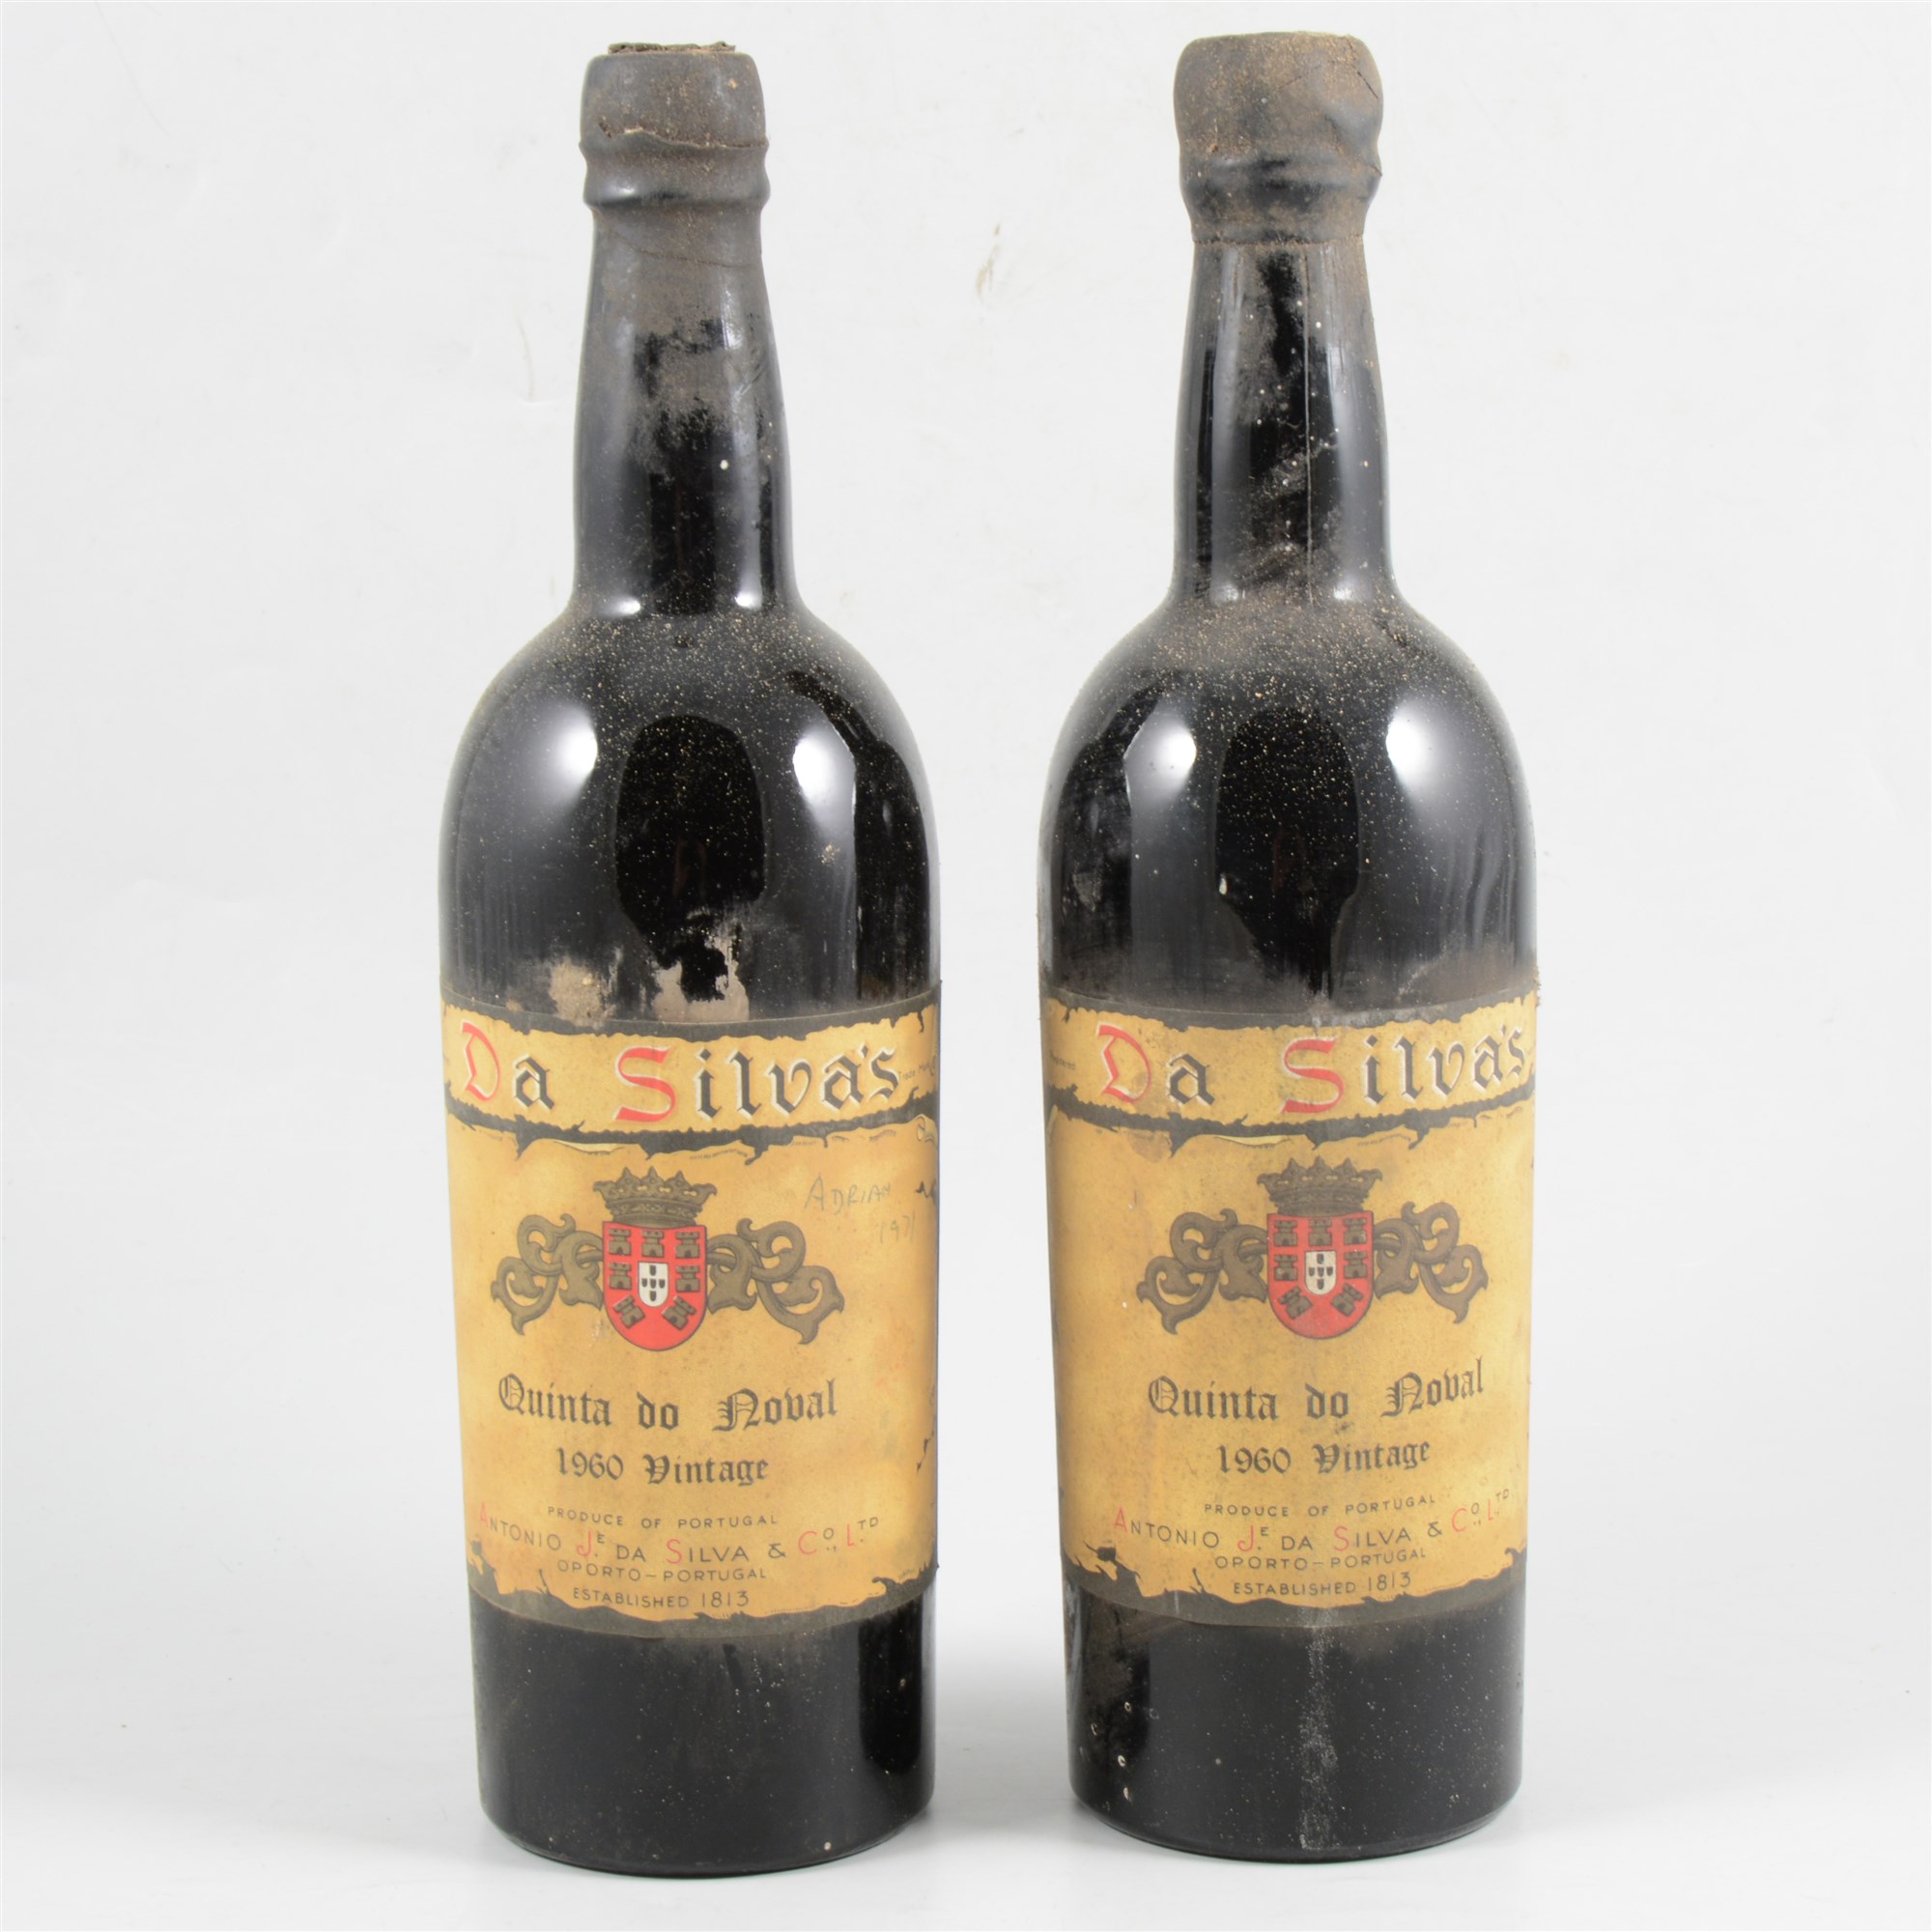 Da Silva's 1960 Vintage Port, Quinta do Noval, 2 bottles